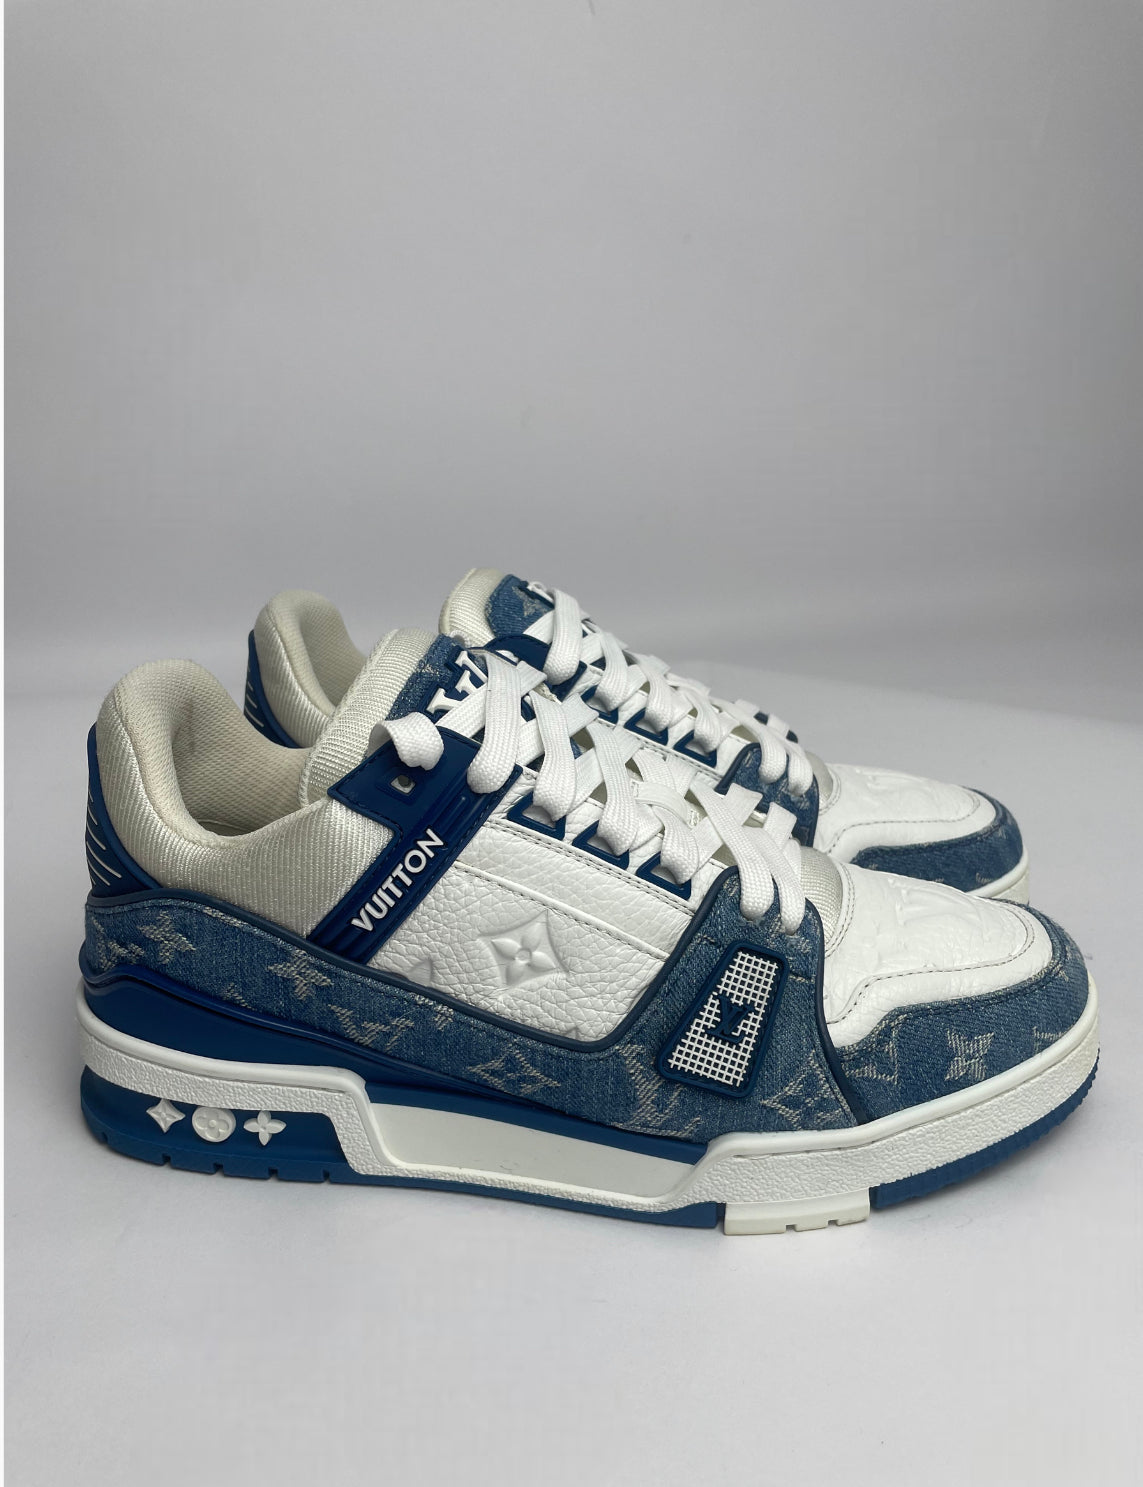 Louis Vuitton Men's LV6 Euro Style Trainer Sneaker